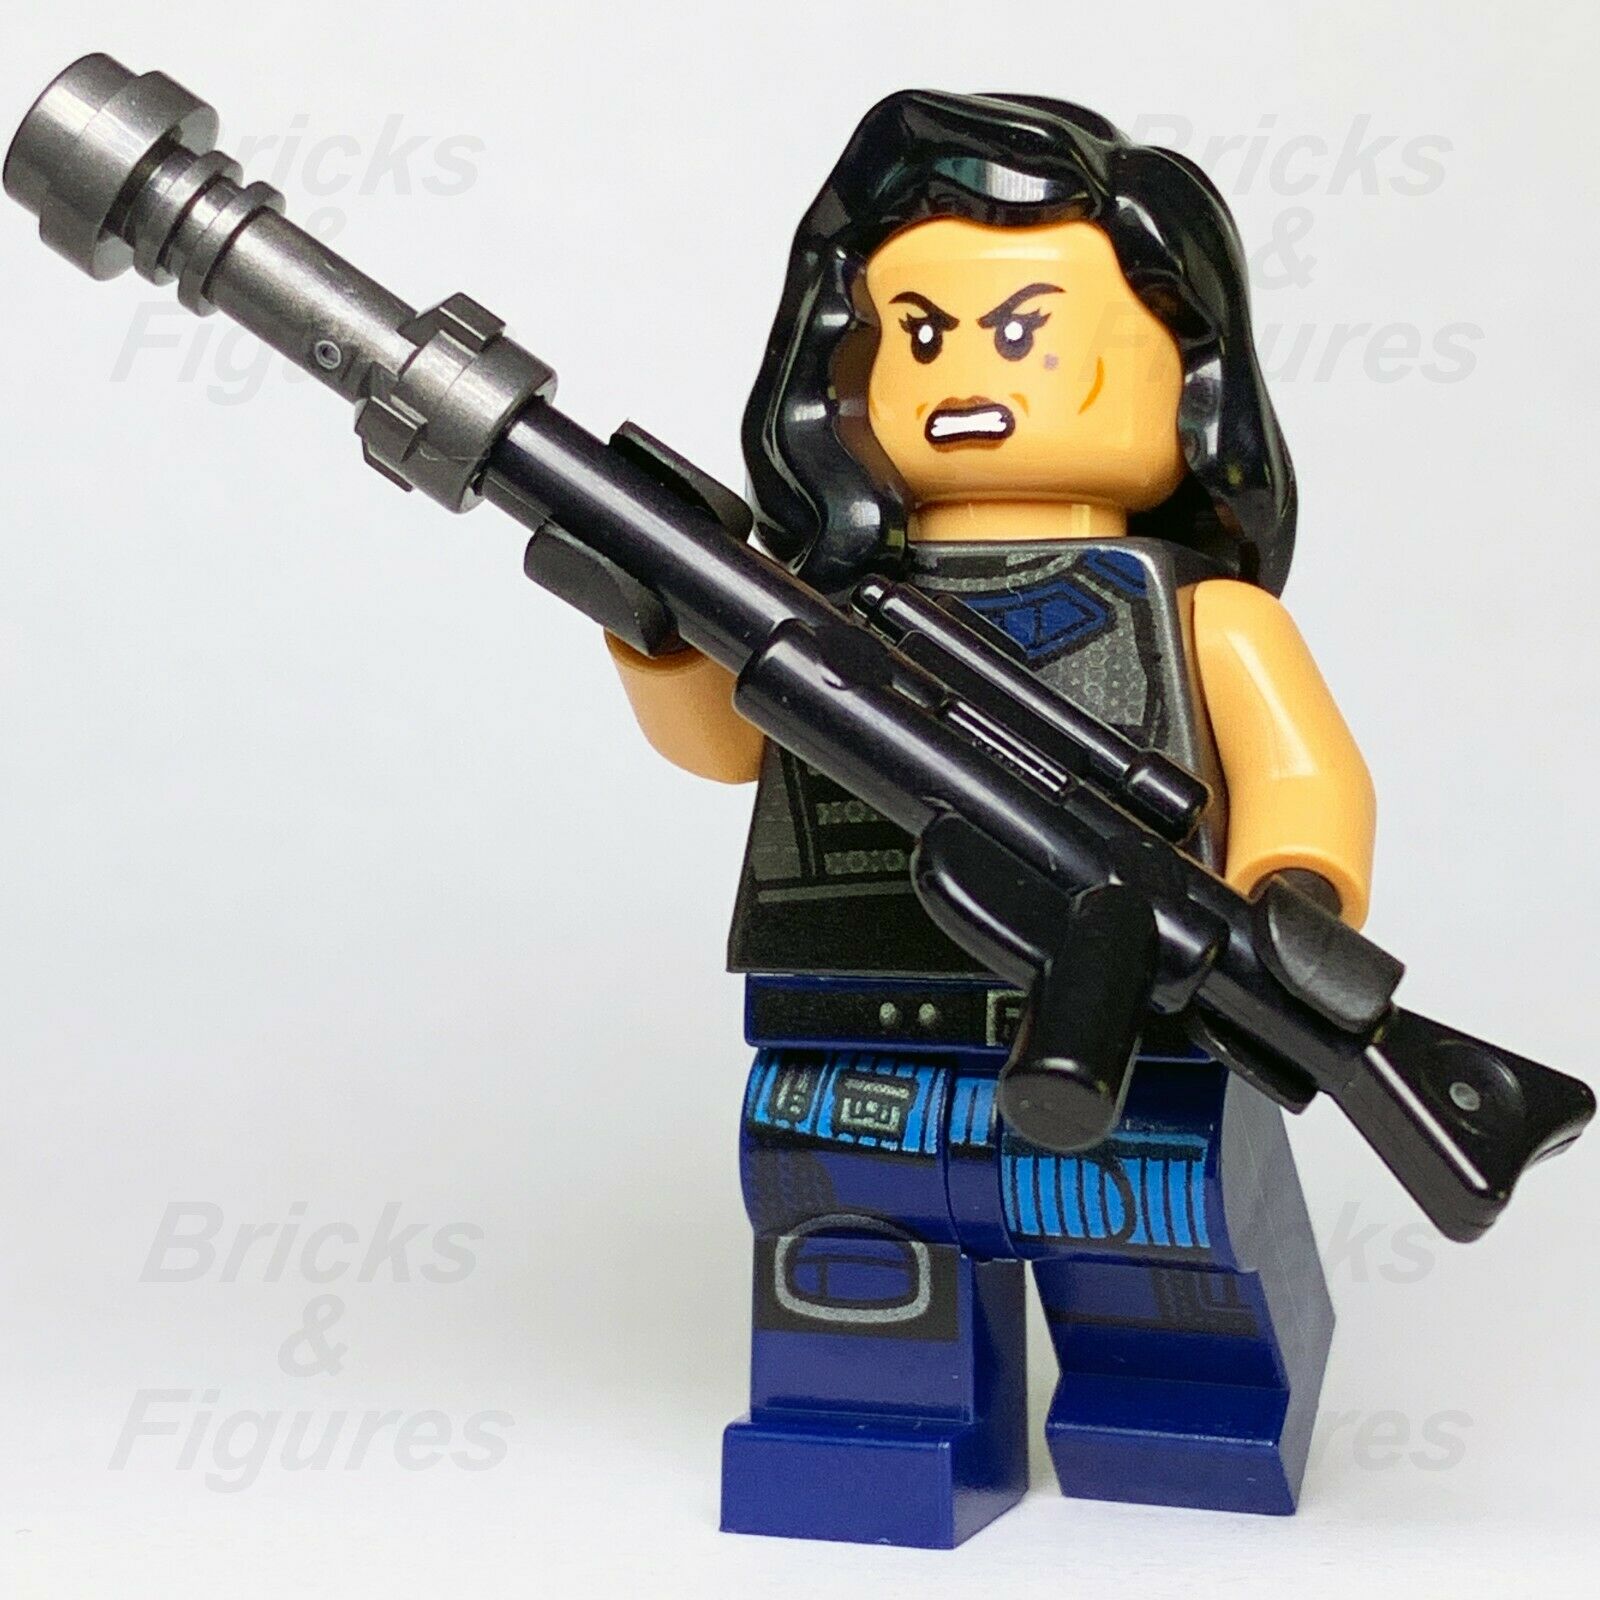 New Star Wars LEGO Cara Dune Shock Trooper The Mandalorian Minifigure 75254 - Bricks & Figures